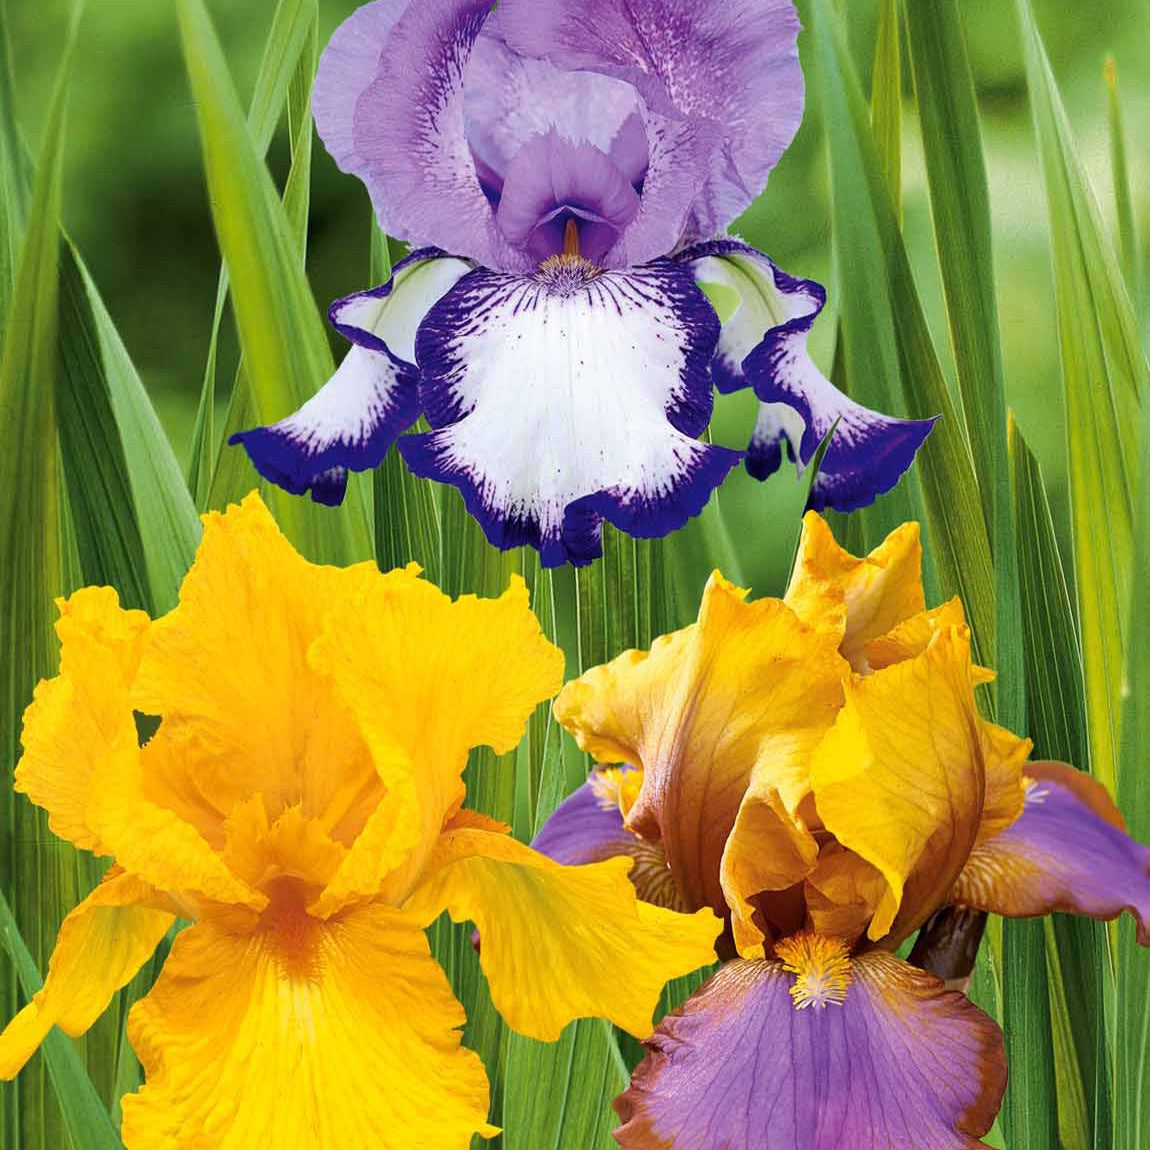 Collection de 6 Iris de jardin : Lasso, Bordure, Sangreal - Iris germanica  (2 lasso, 2 bordure, 2 sangreal) - Plantes